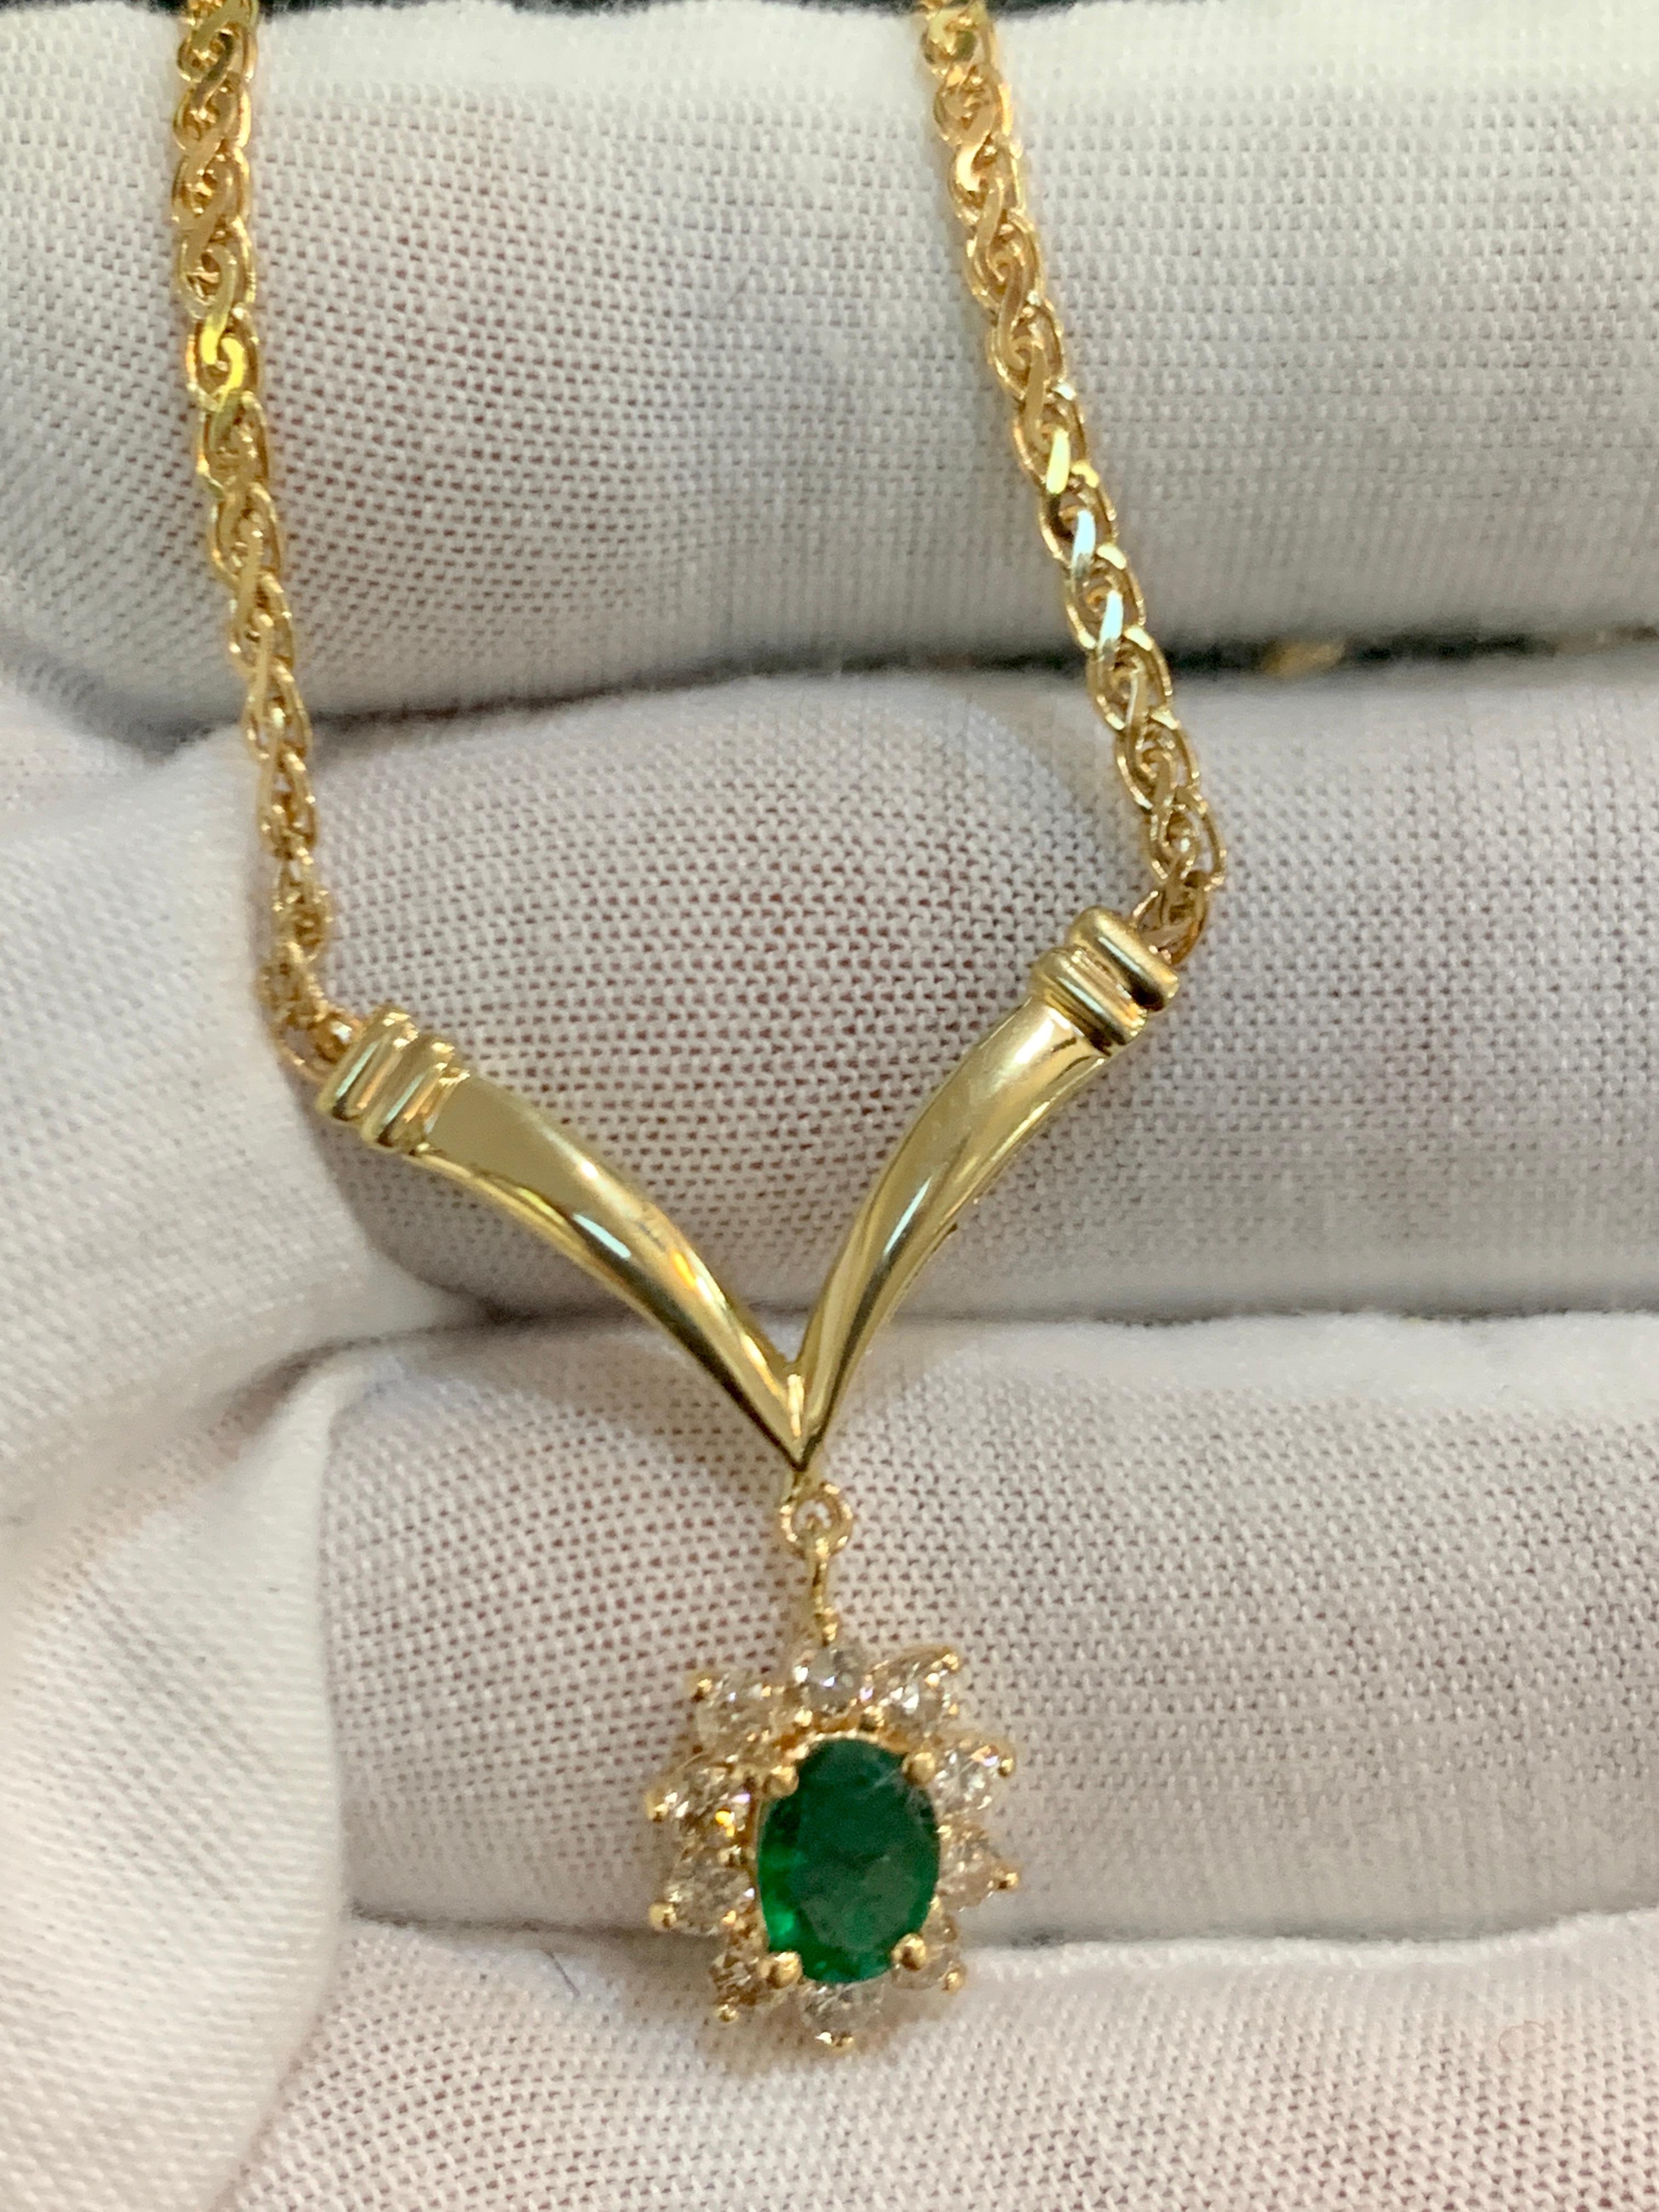 Women's 1.2 Carat Oval Shape Emerald & .5 Carat Diamond Necklace in 14 Karat Yellow Gold